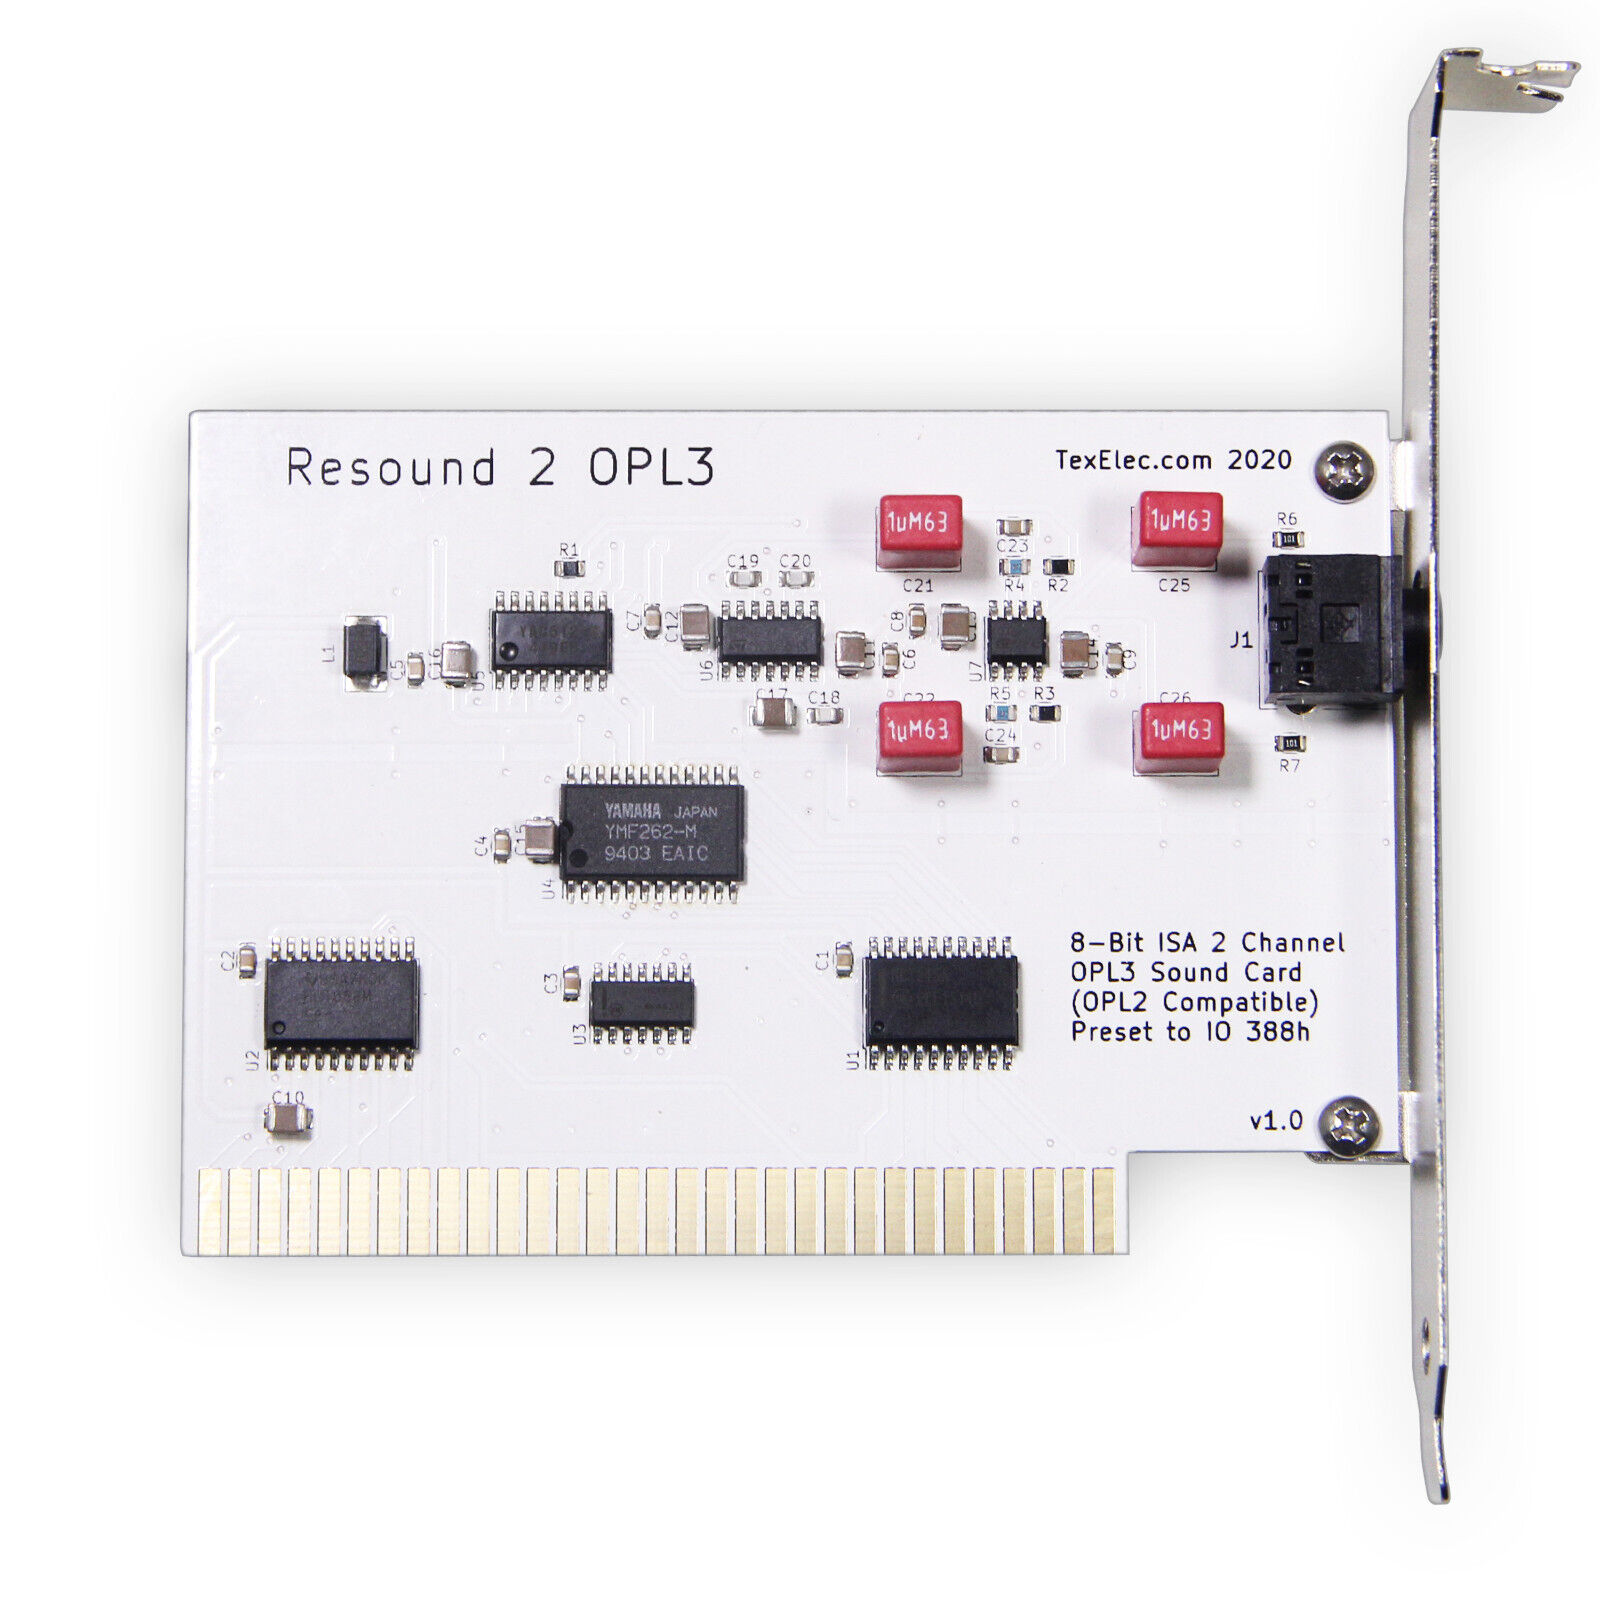 Resound 2 OPL3 – 8 Bit ISA Adlib Compatible Sound Card - by TexElec